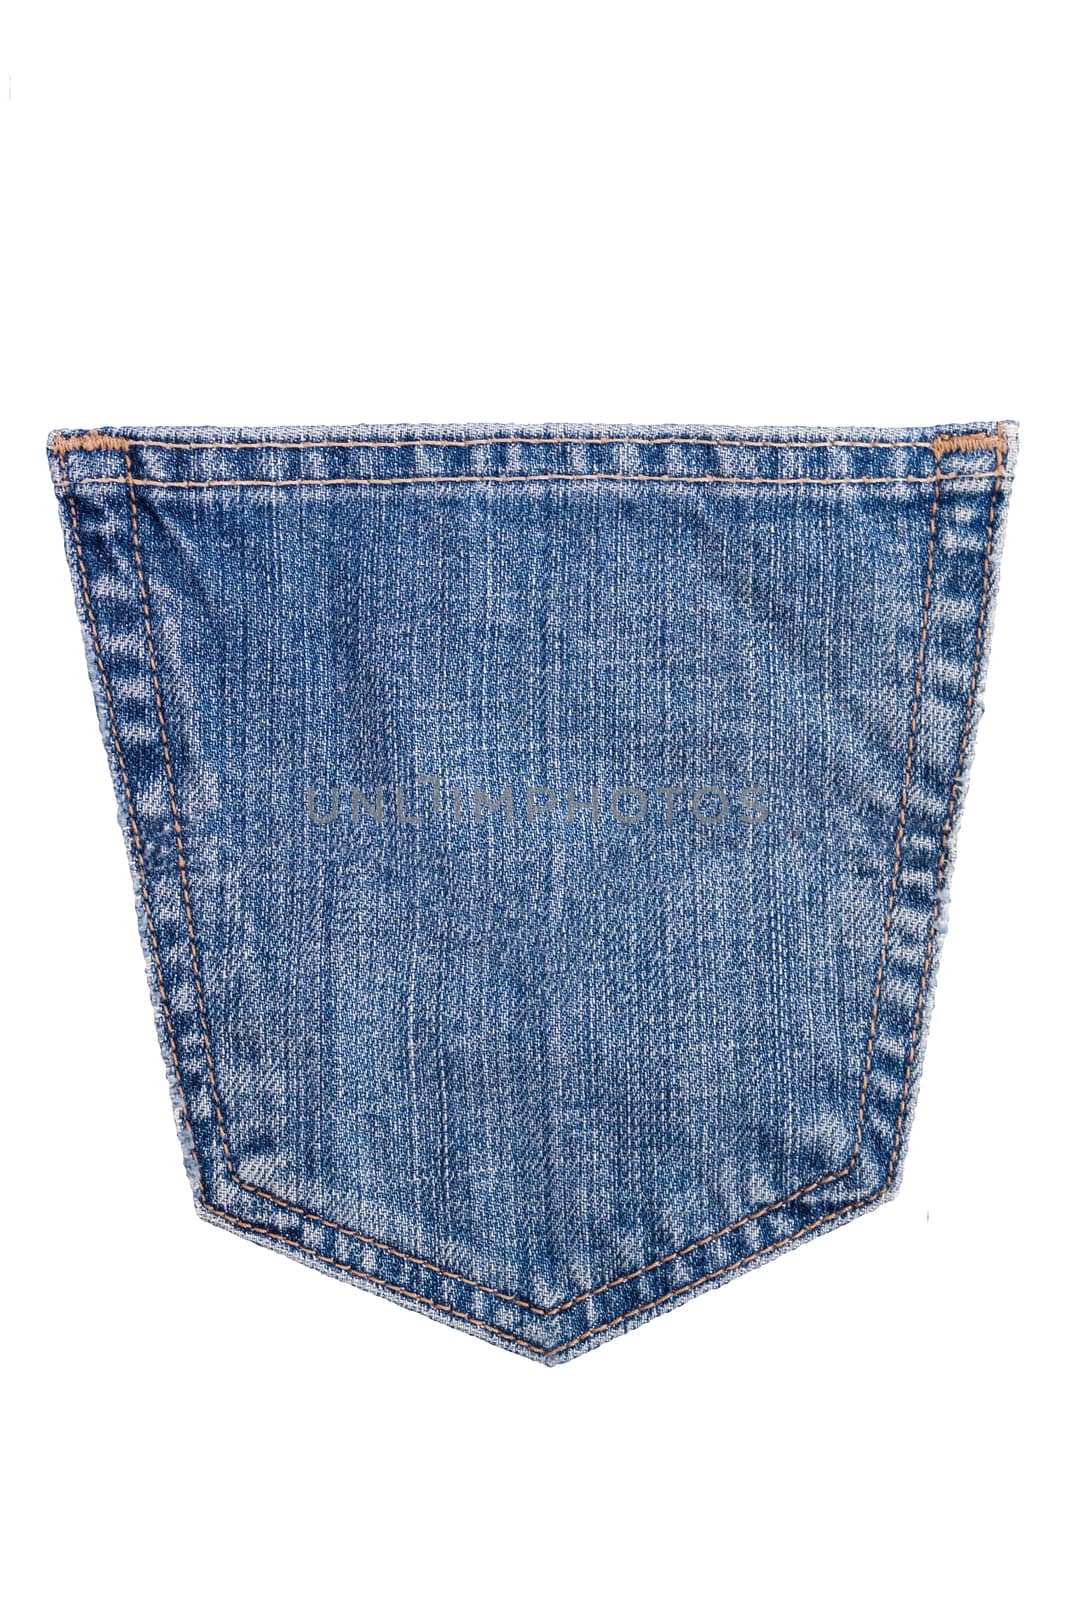 denim blue jean pocket texture is the classic indigo fashion. Denim blue jeans pocket isolated on white background